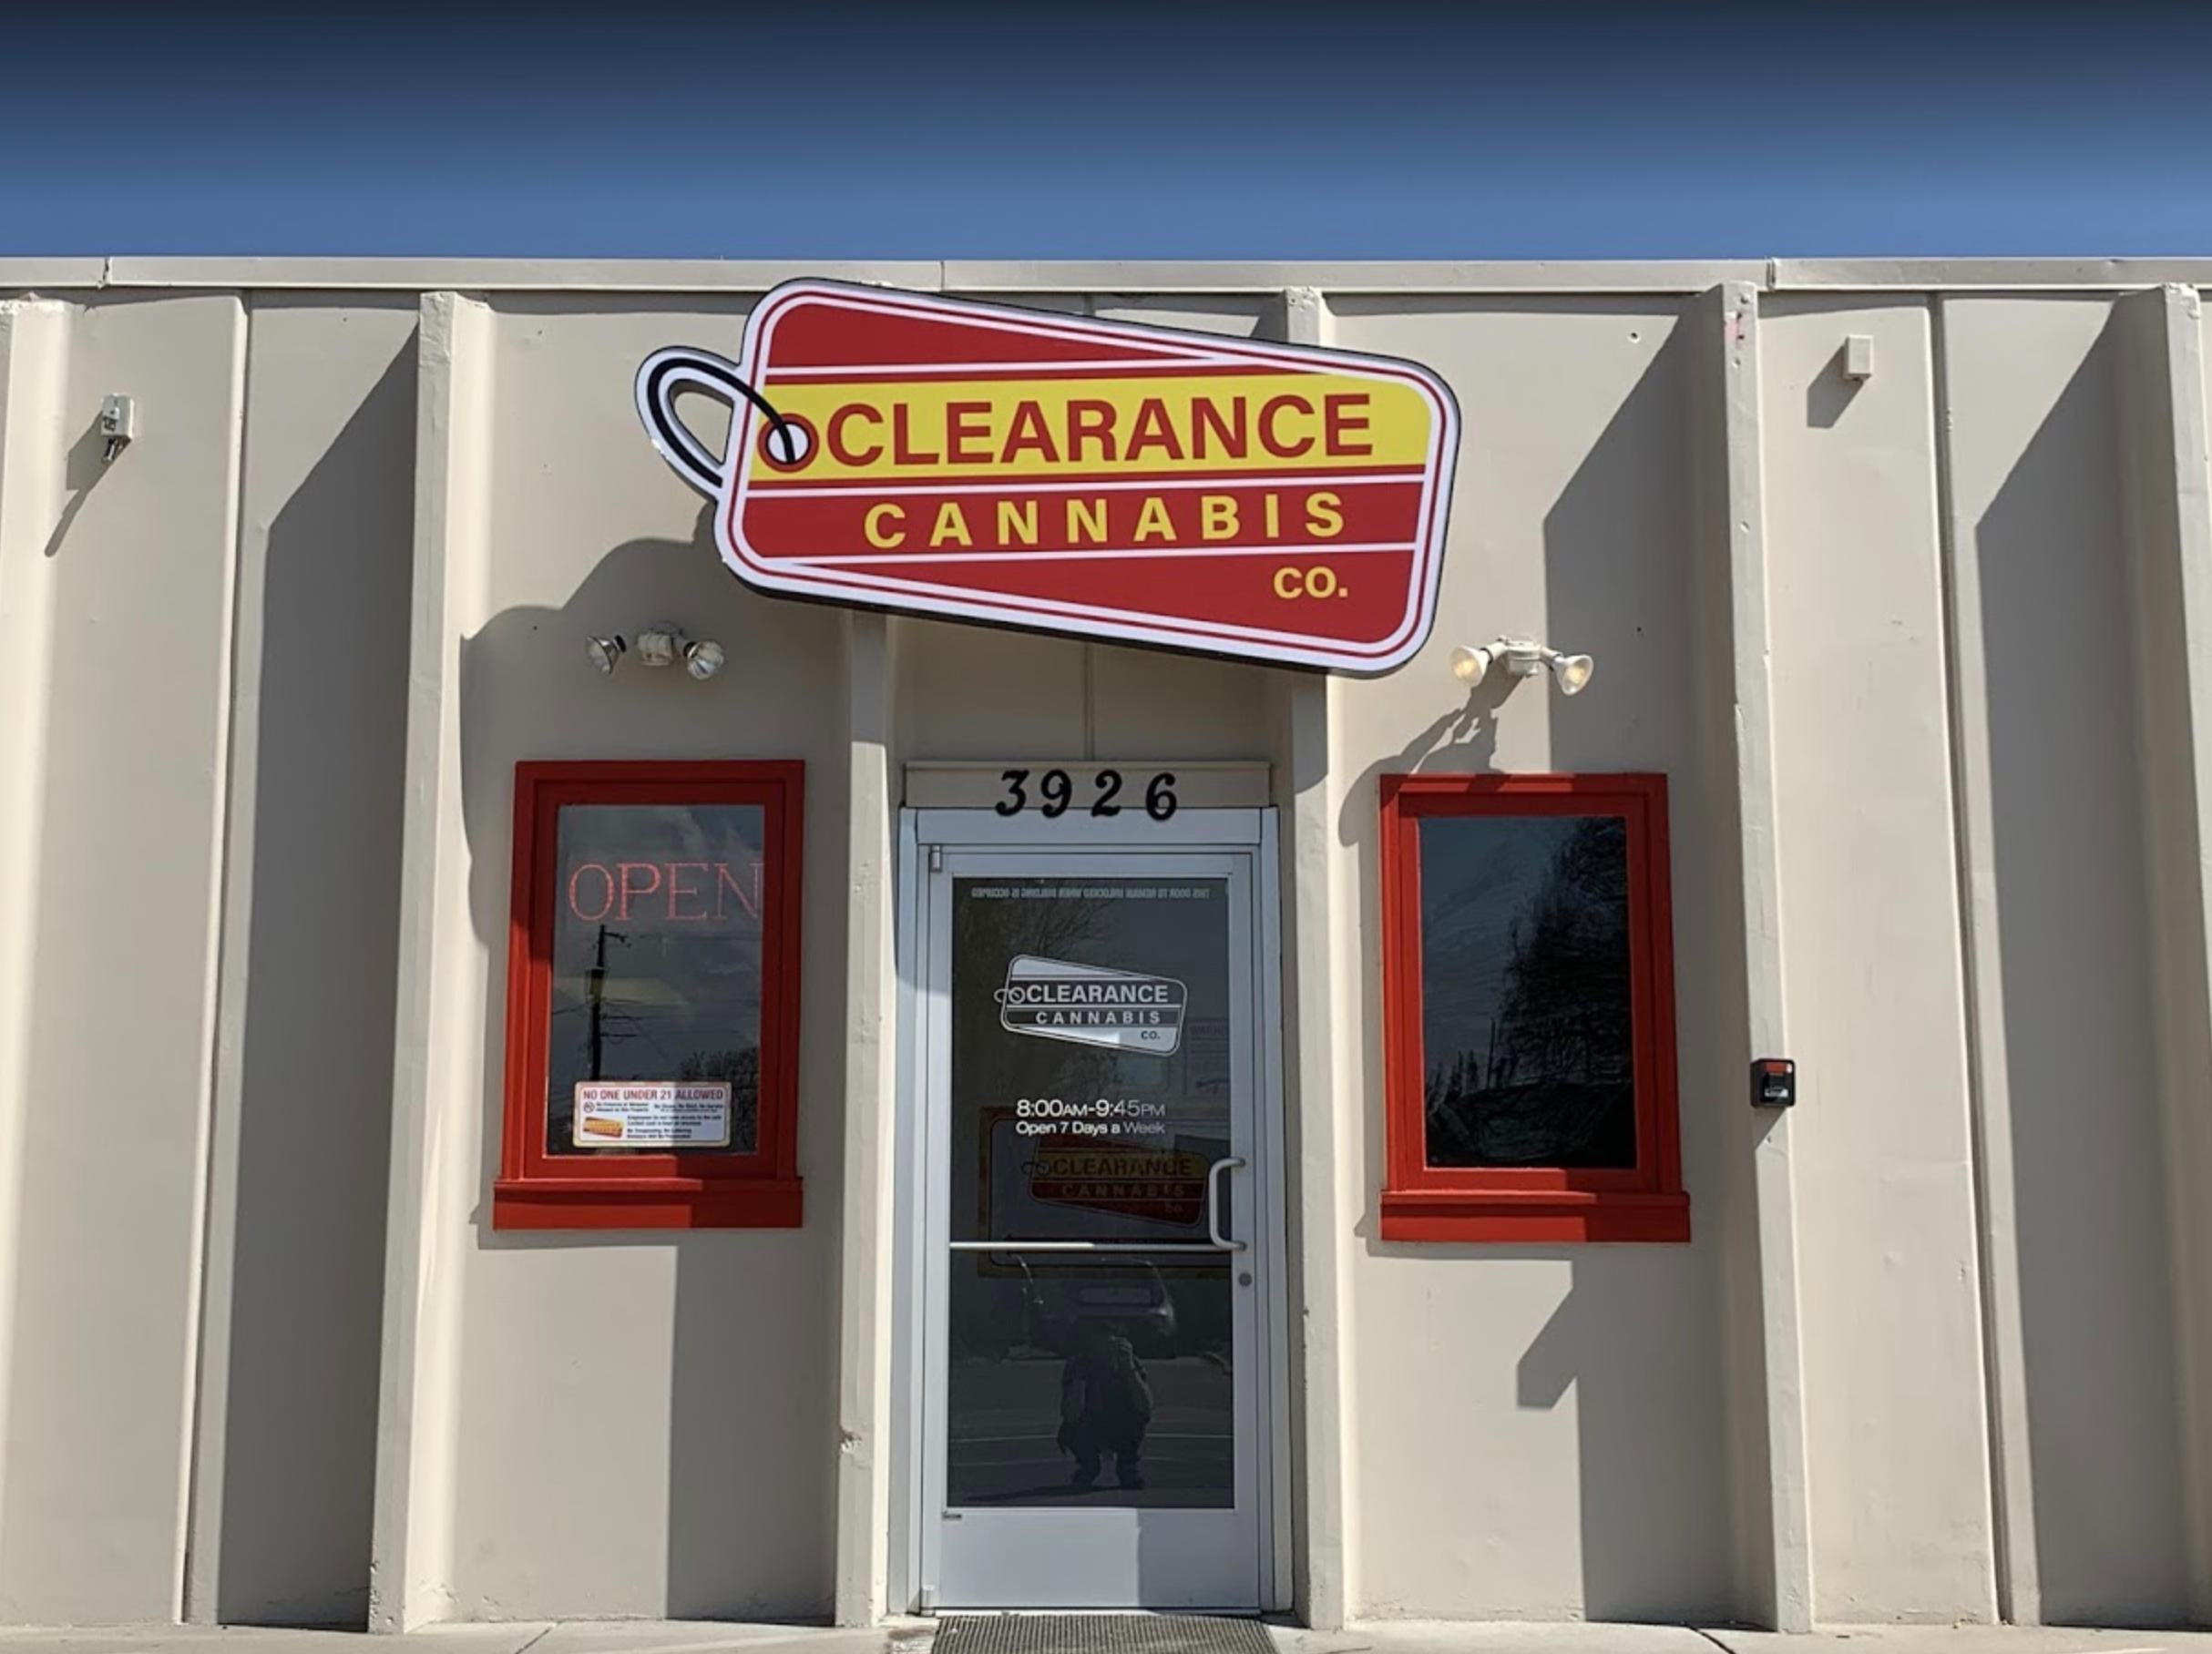 Clearance Cannabis Company Discount Cannabis Photo